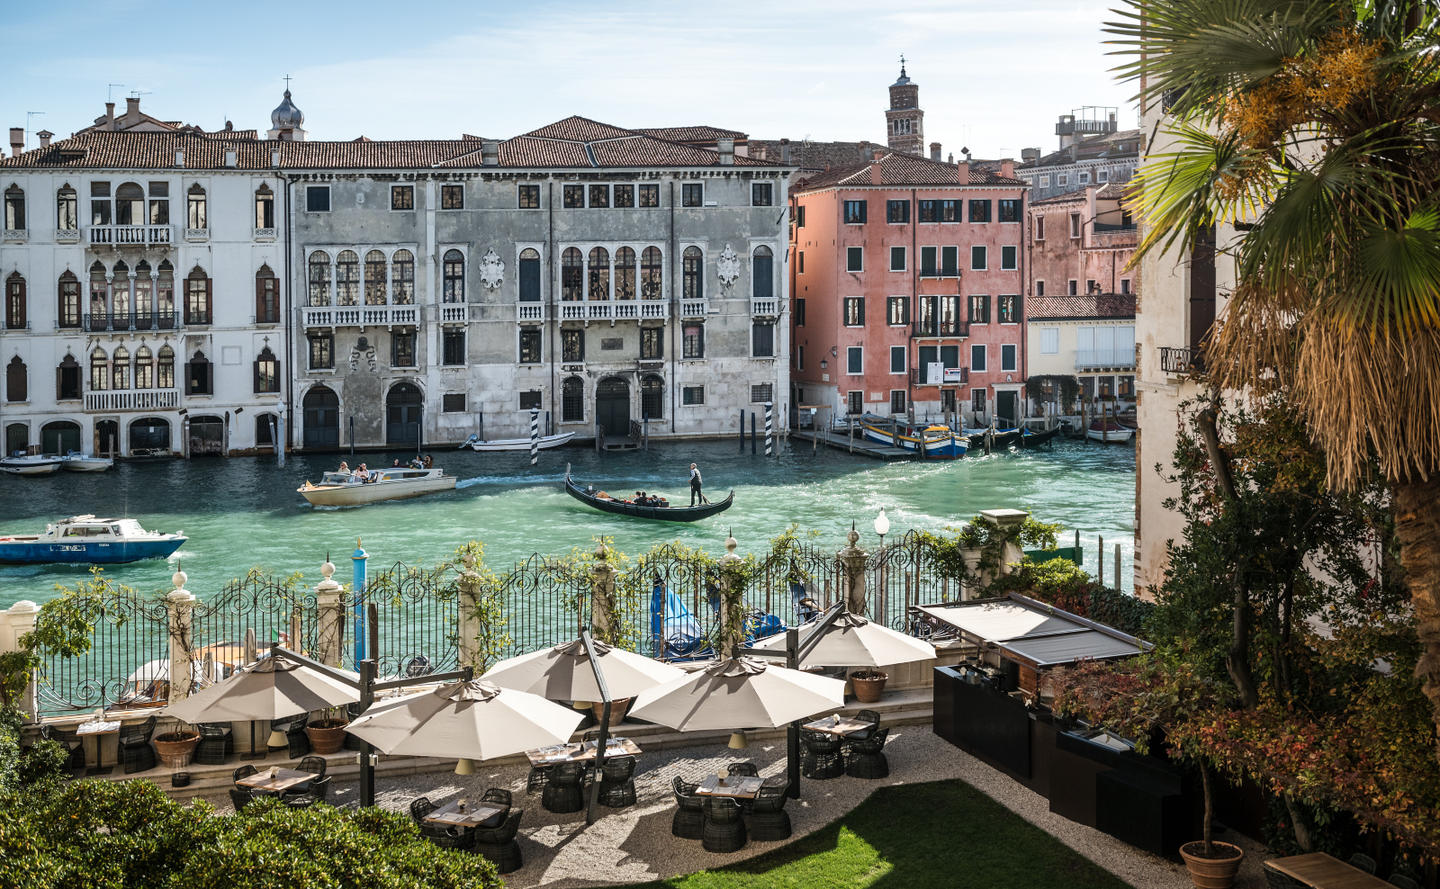 Aman Venice, Italy - Papadopoli Stanza Canal Grande View